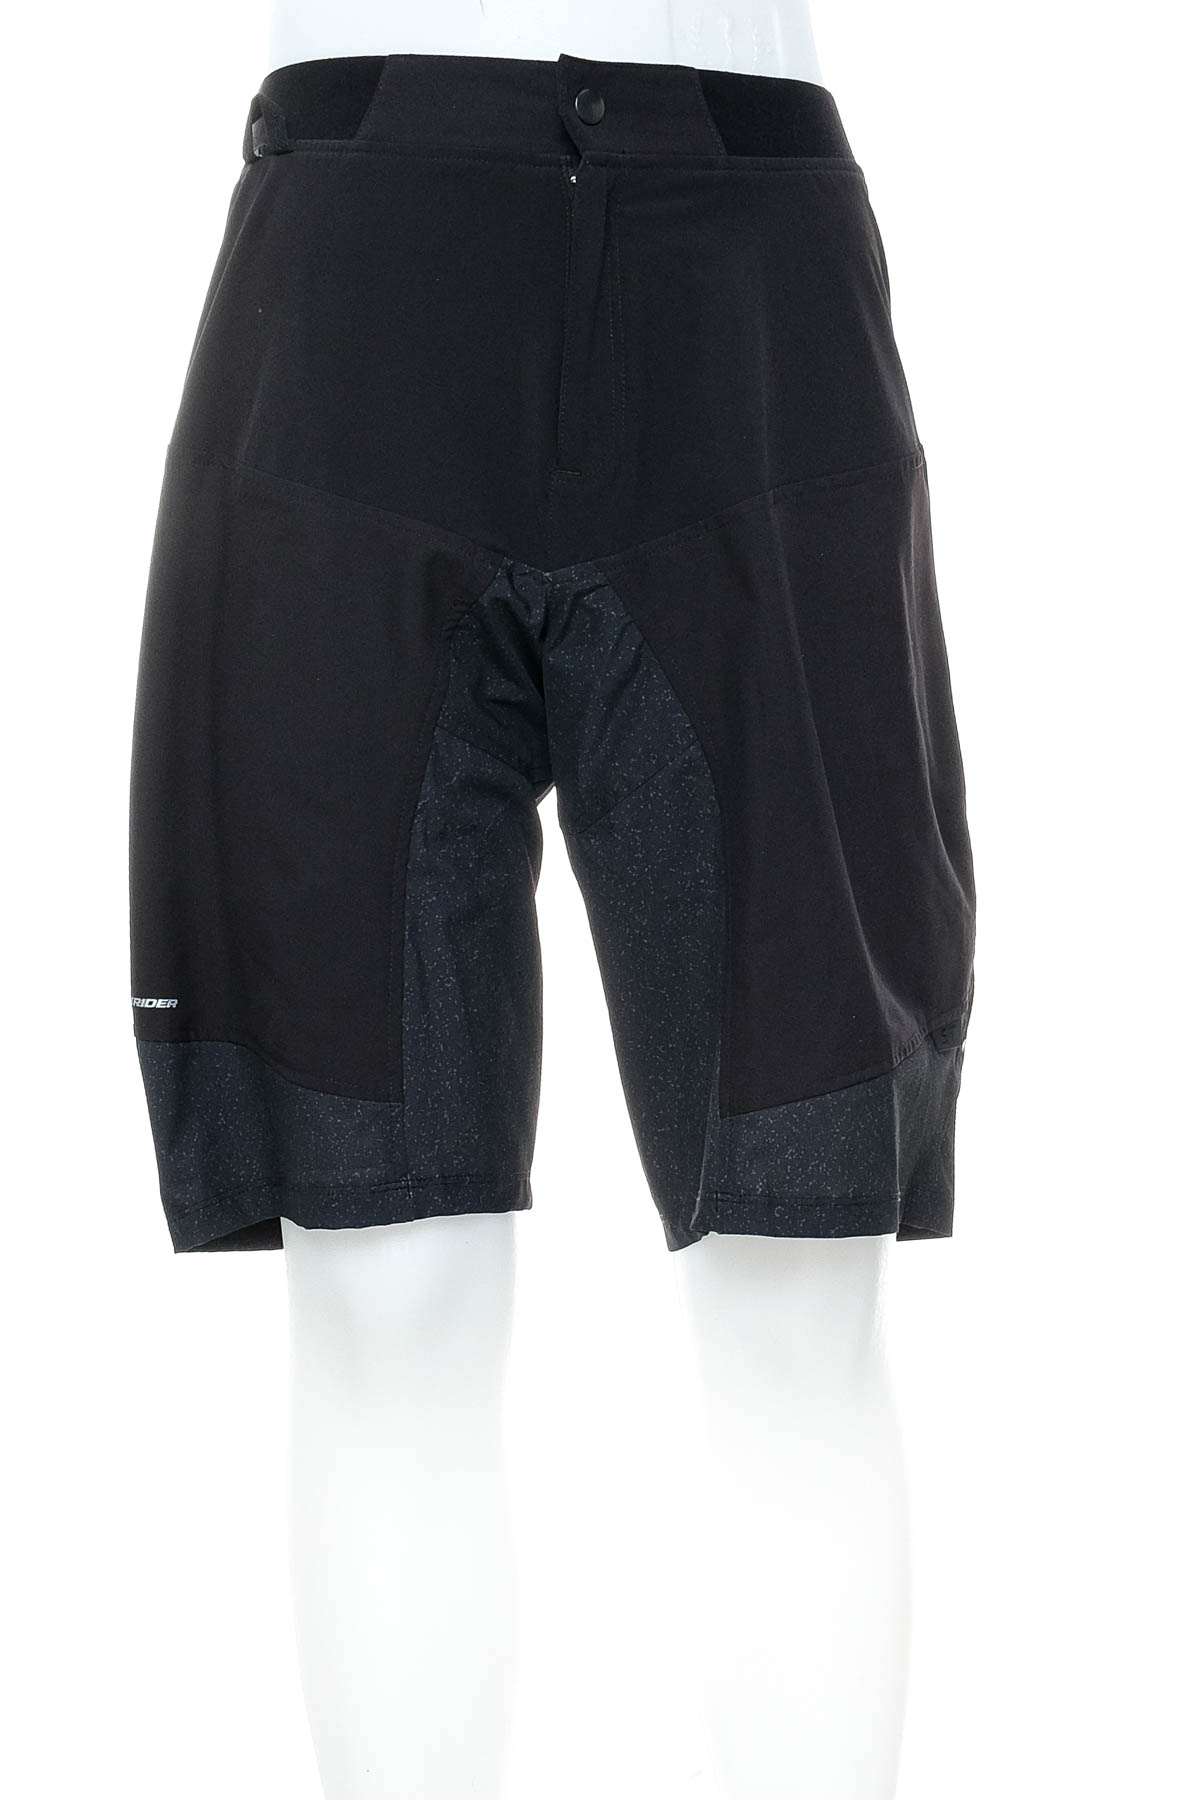 Men's shorts - Rockrider x DECATHLON - 0